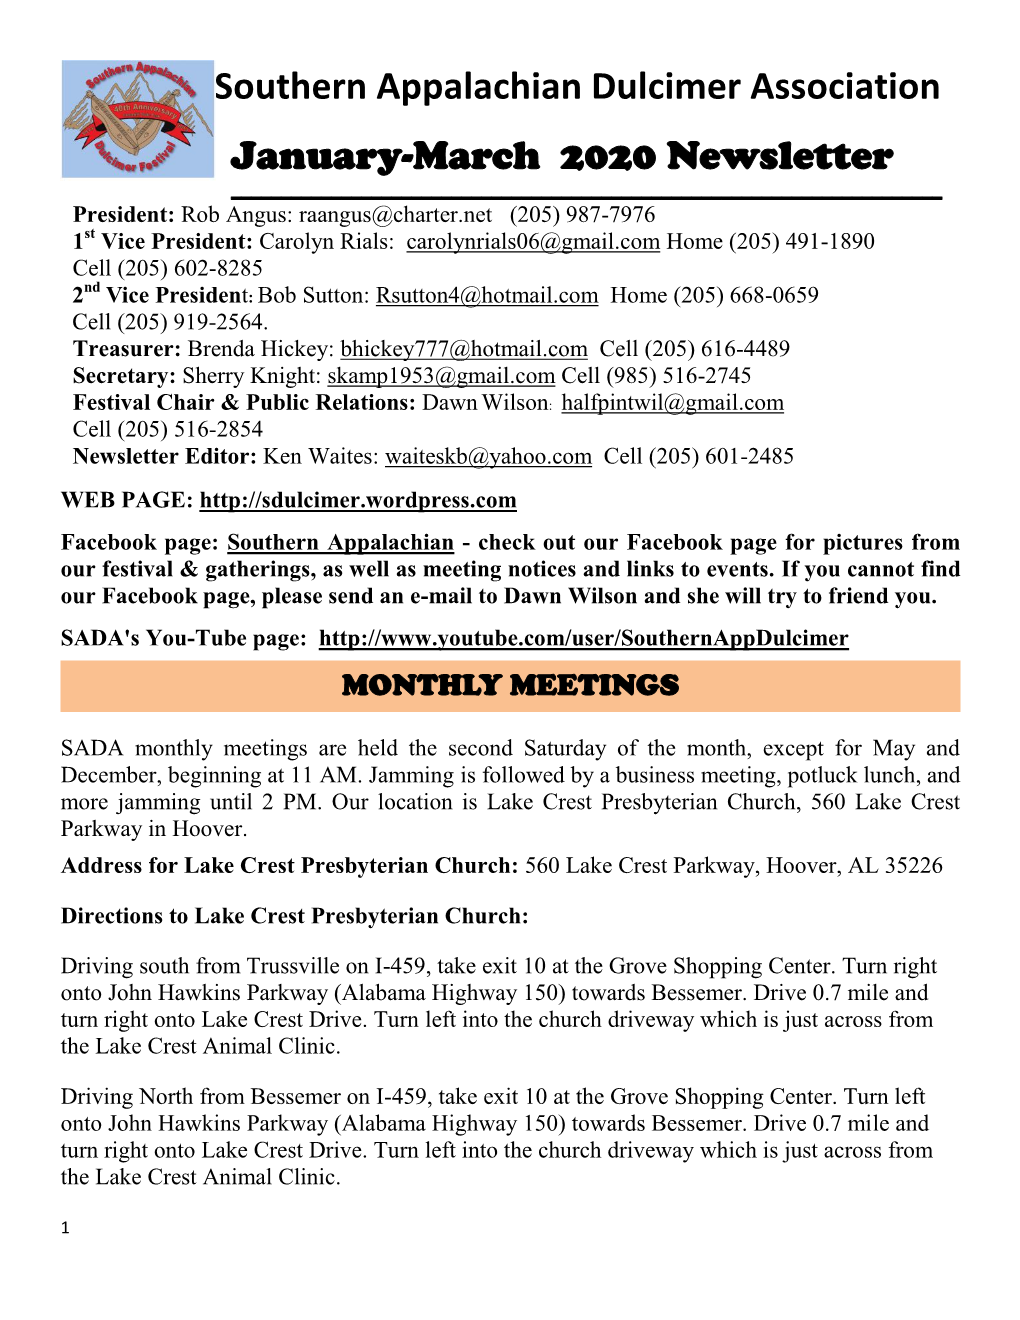 Southern Appalachian Dulcimer Association January-March 2020 Newsletter